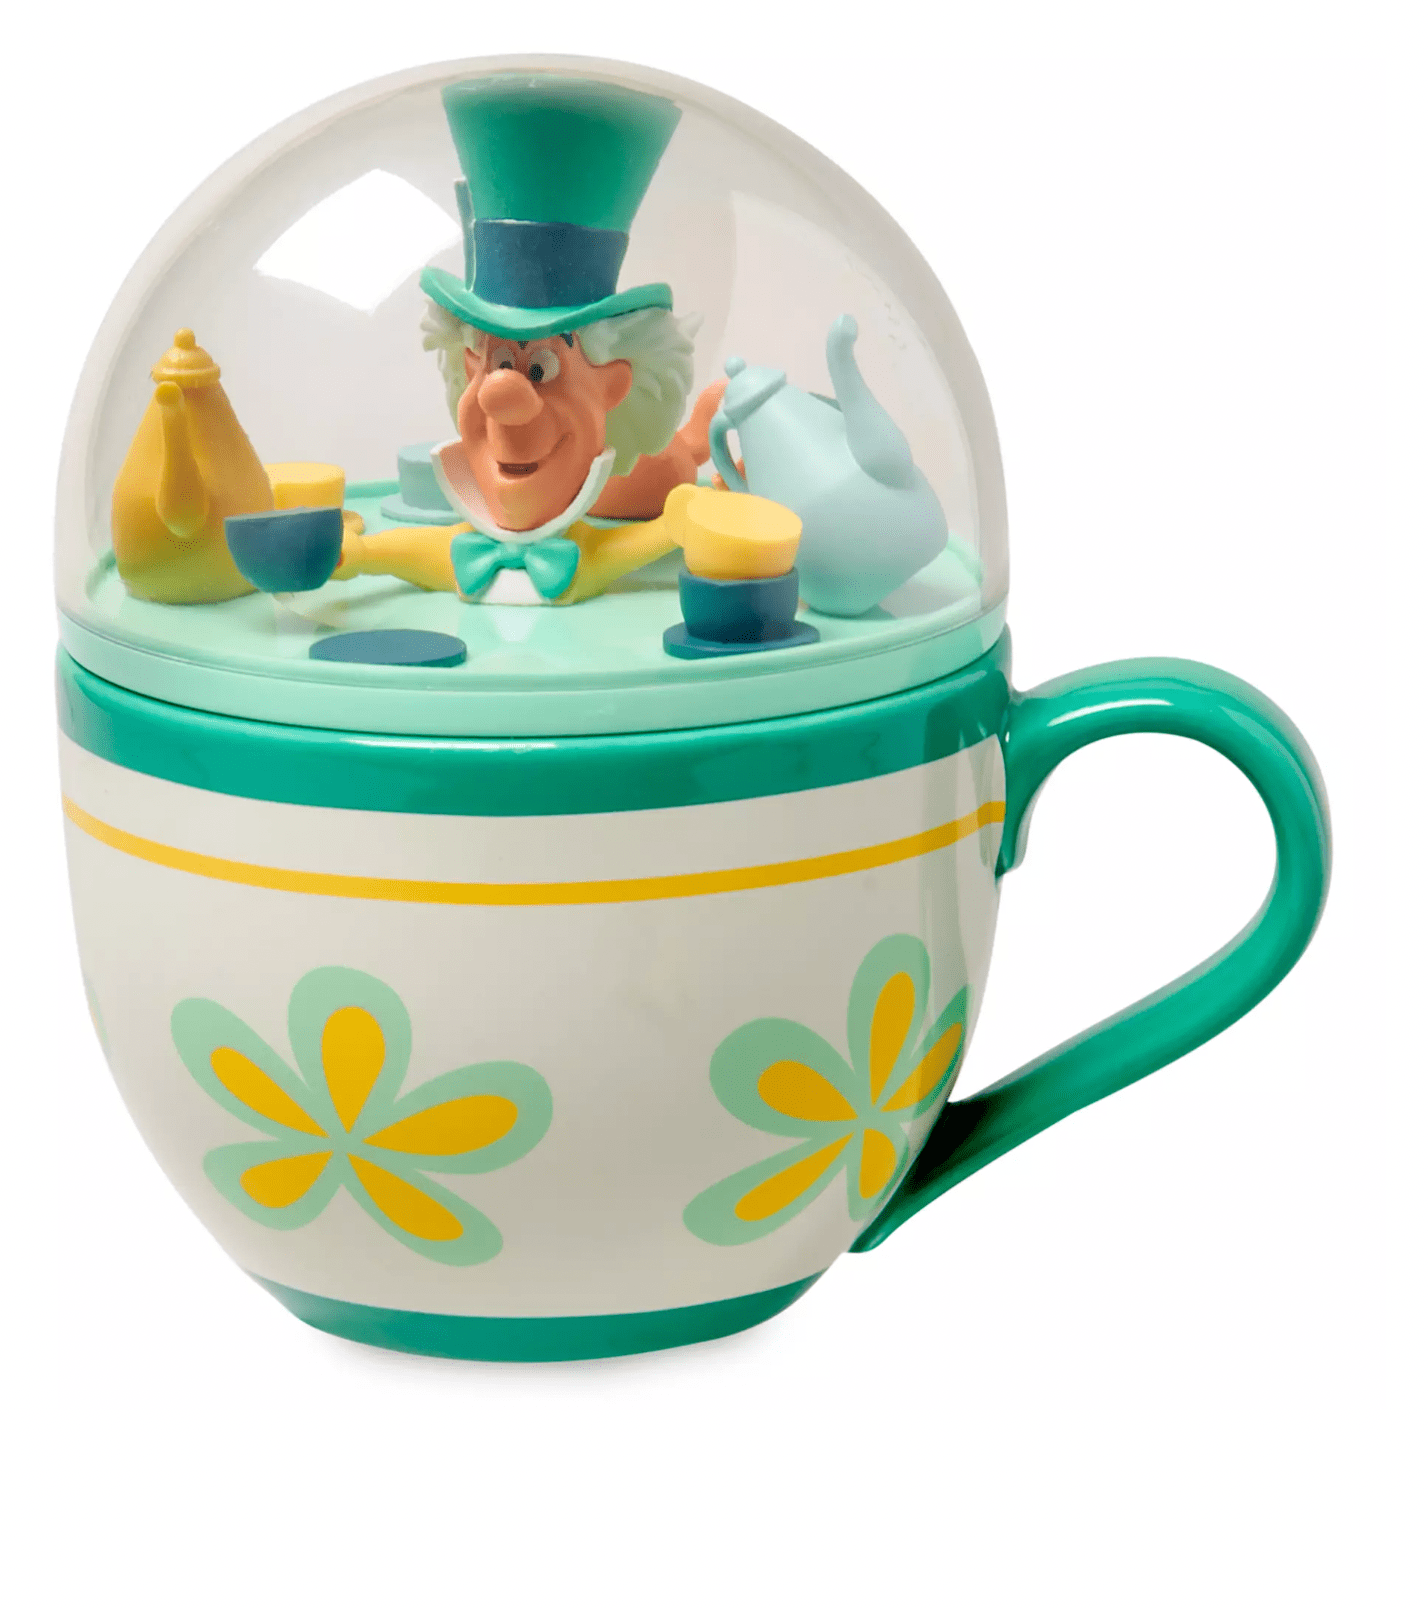 Alice in Wonderland Teacup -   Tea cups, Alice in wonderland tea  party, Alice in wonderland